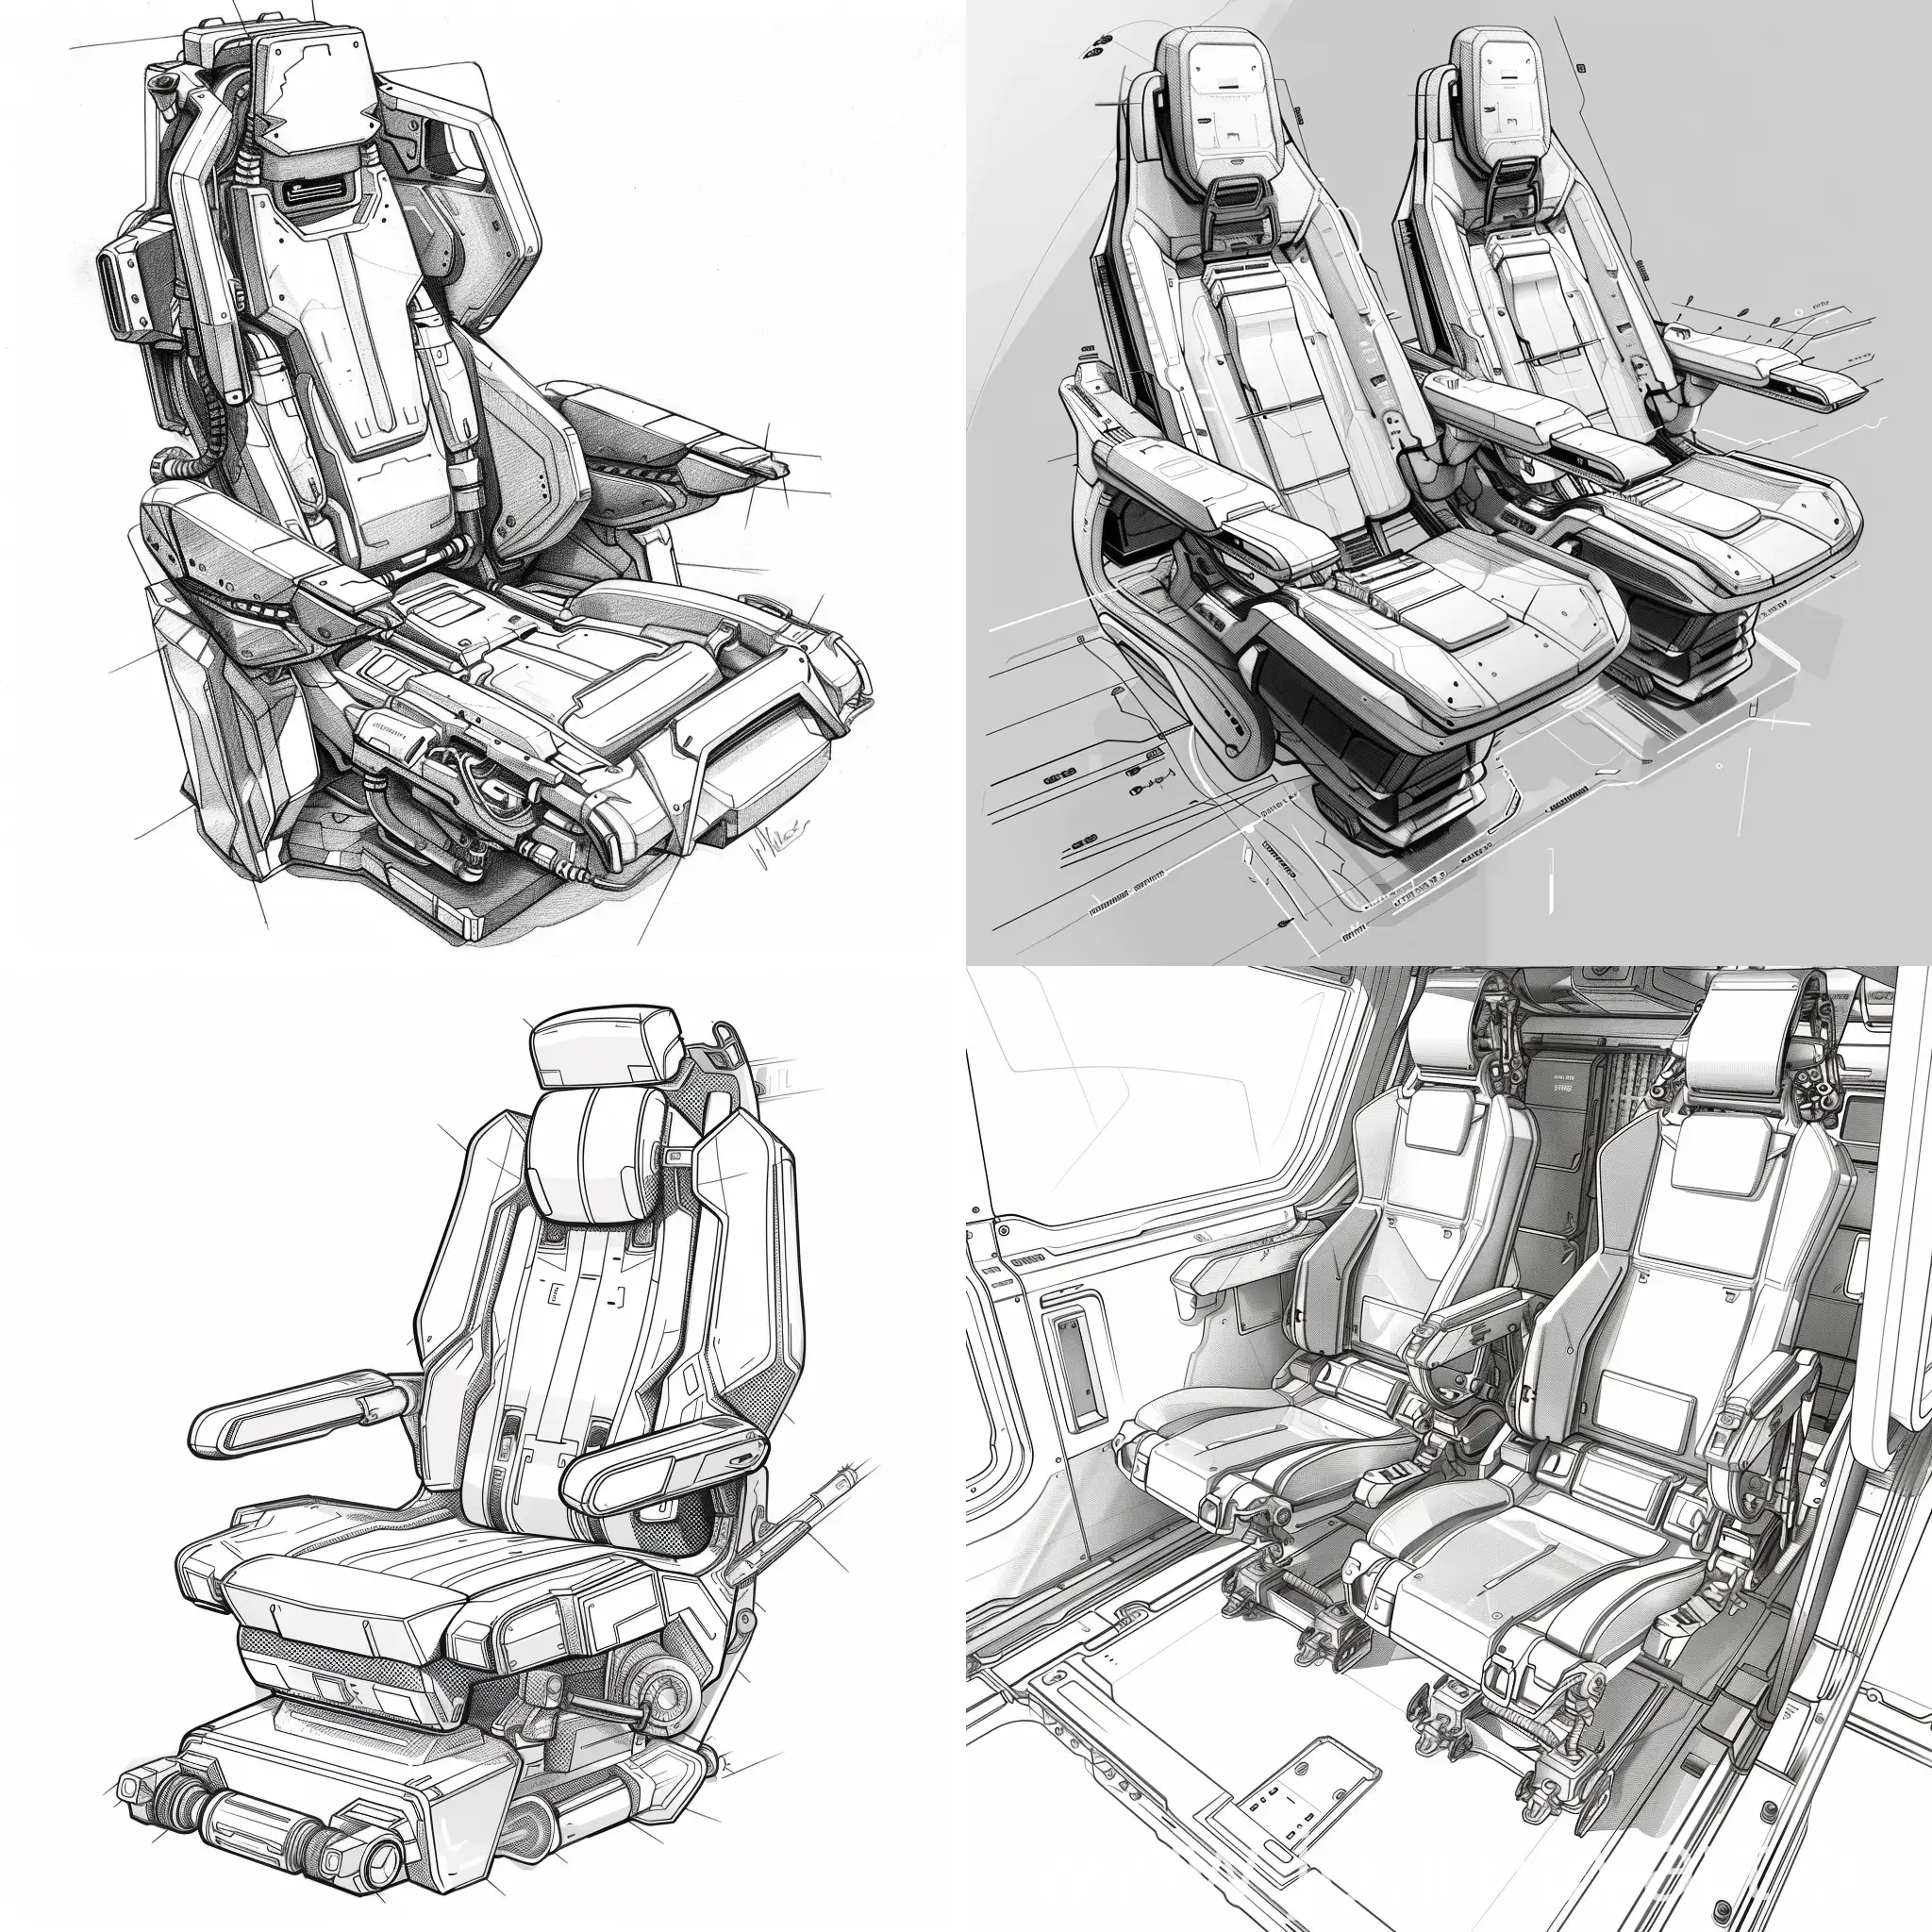 Futuristic-Line-Drawing-of-HeavyDuty-Seats